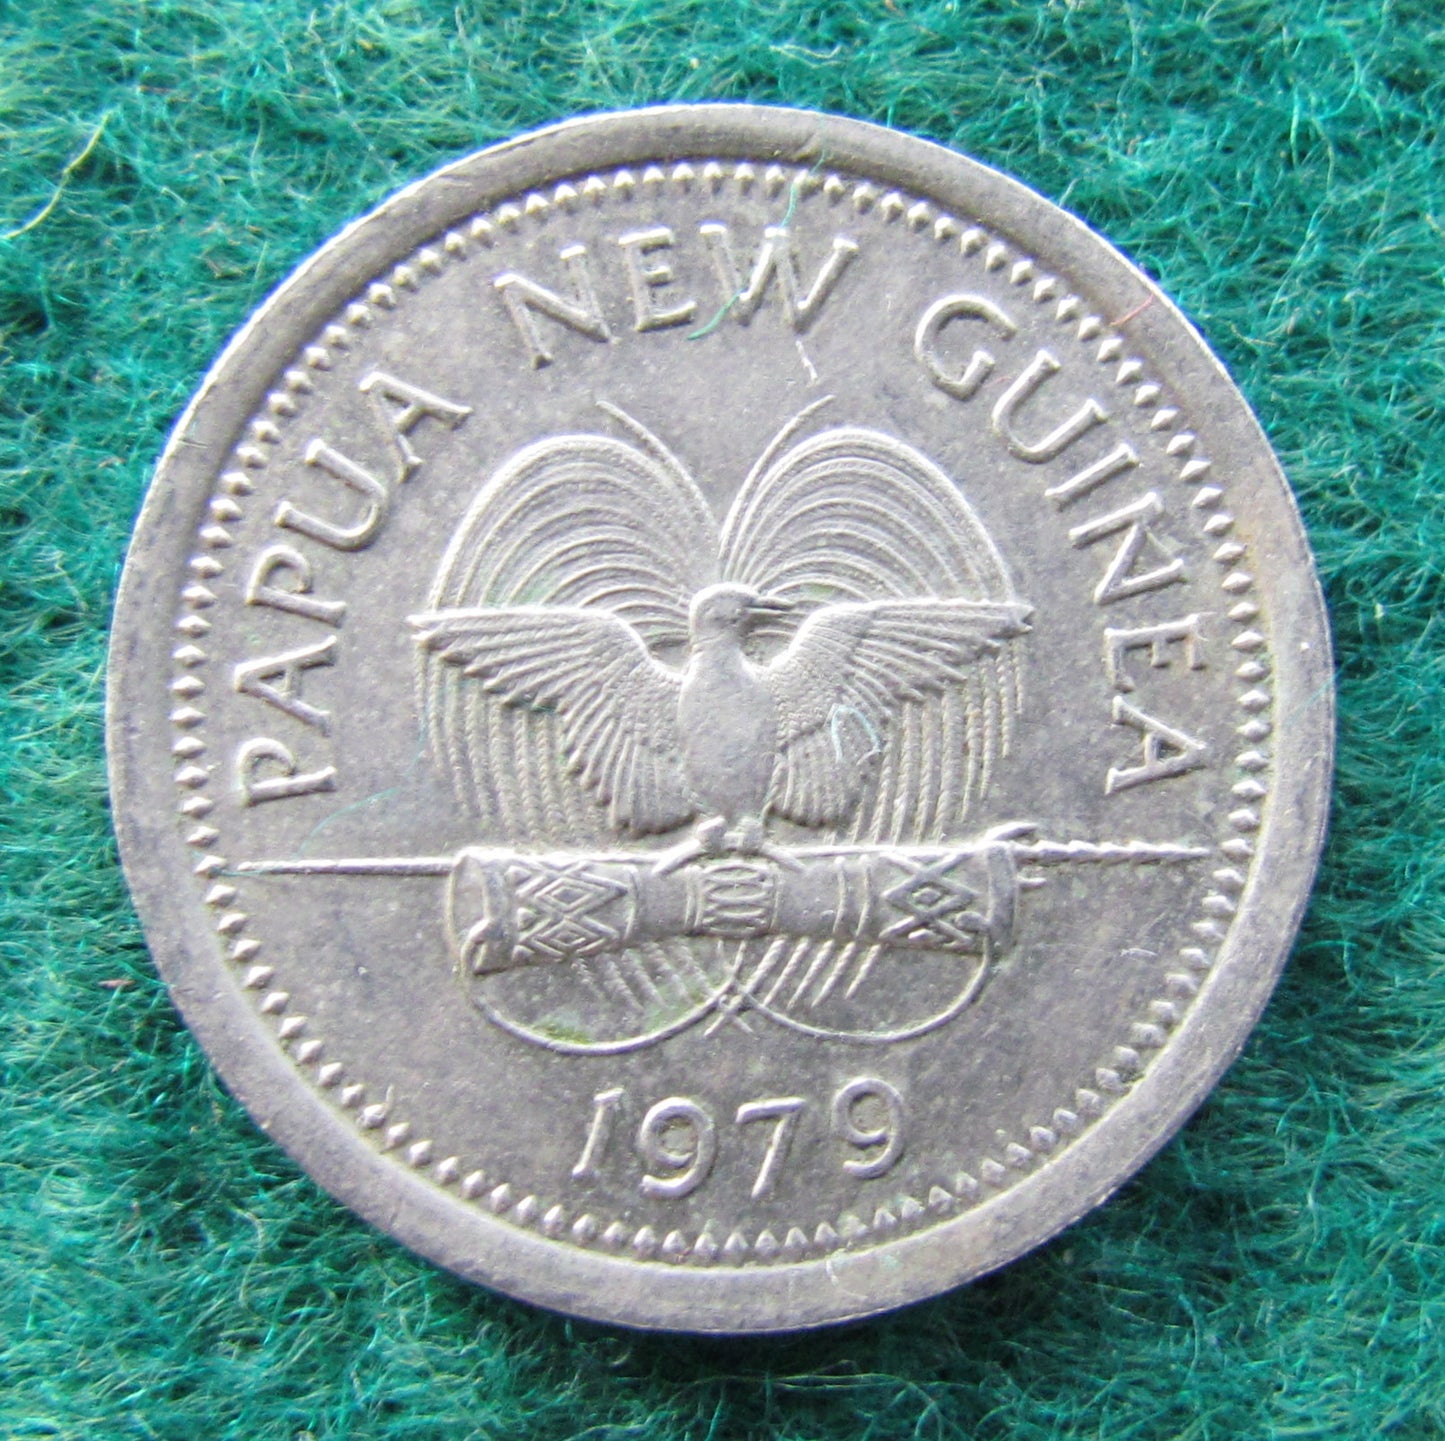 New Guinea 1979 5 Toea Coin - Circulated